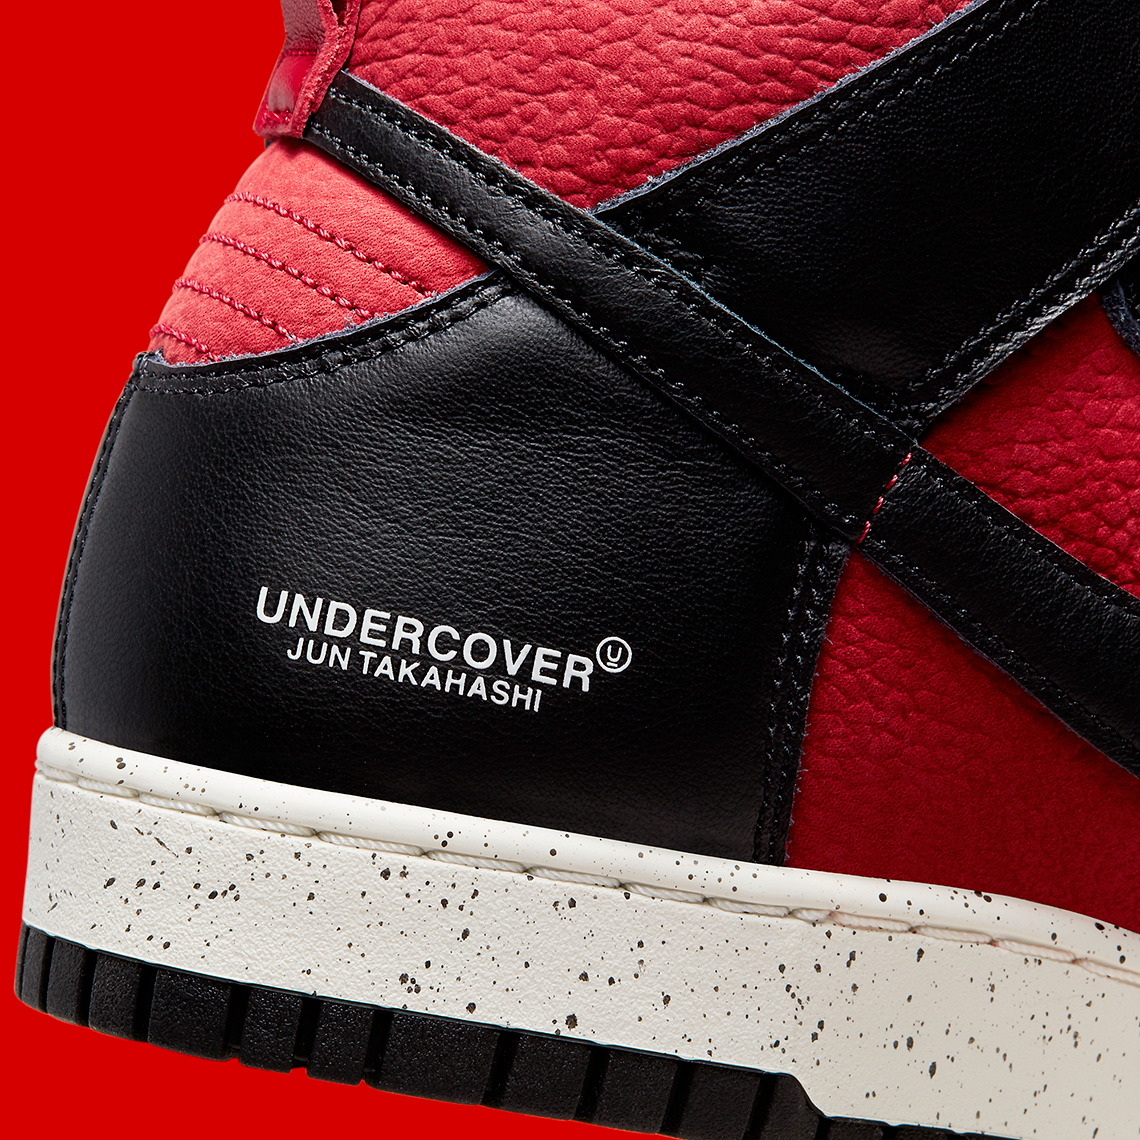 Undercover Nike what Dunk High Uba Dd9401 600 Release Date 1